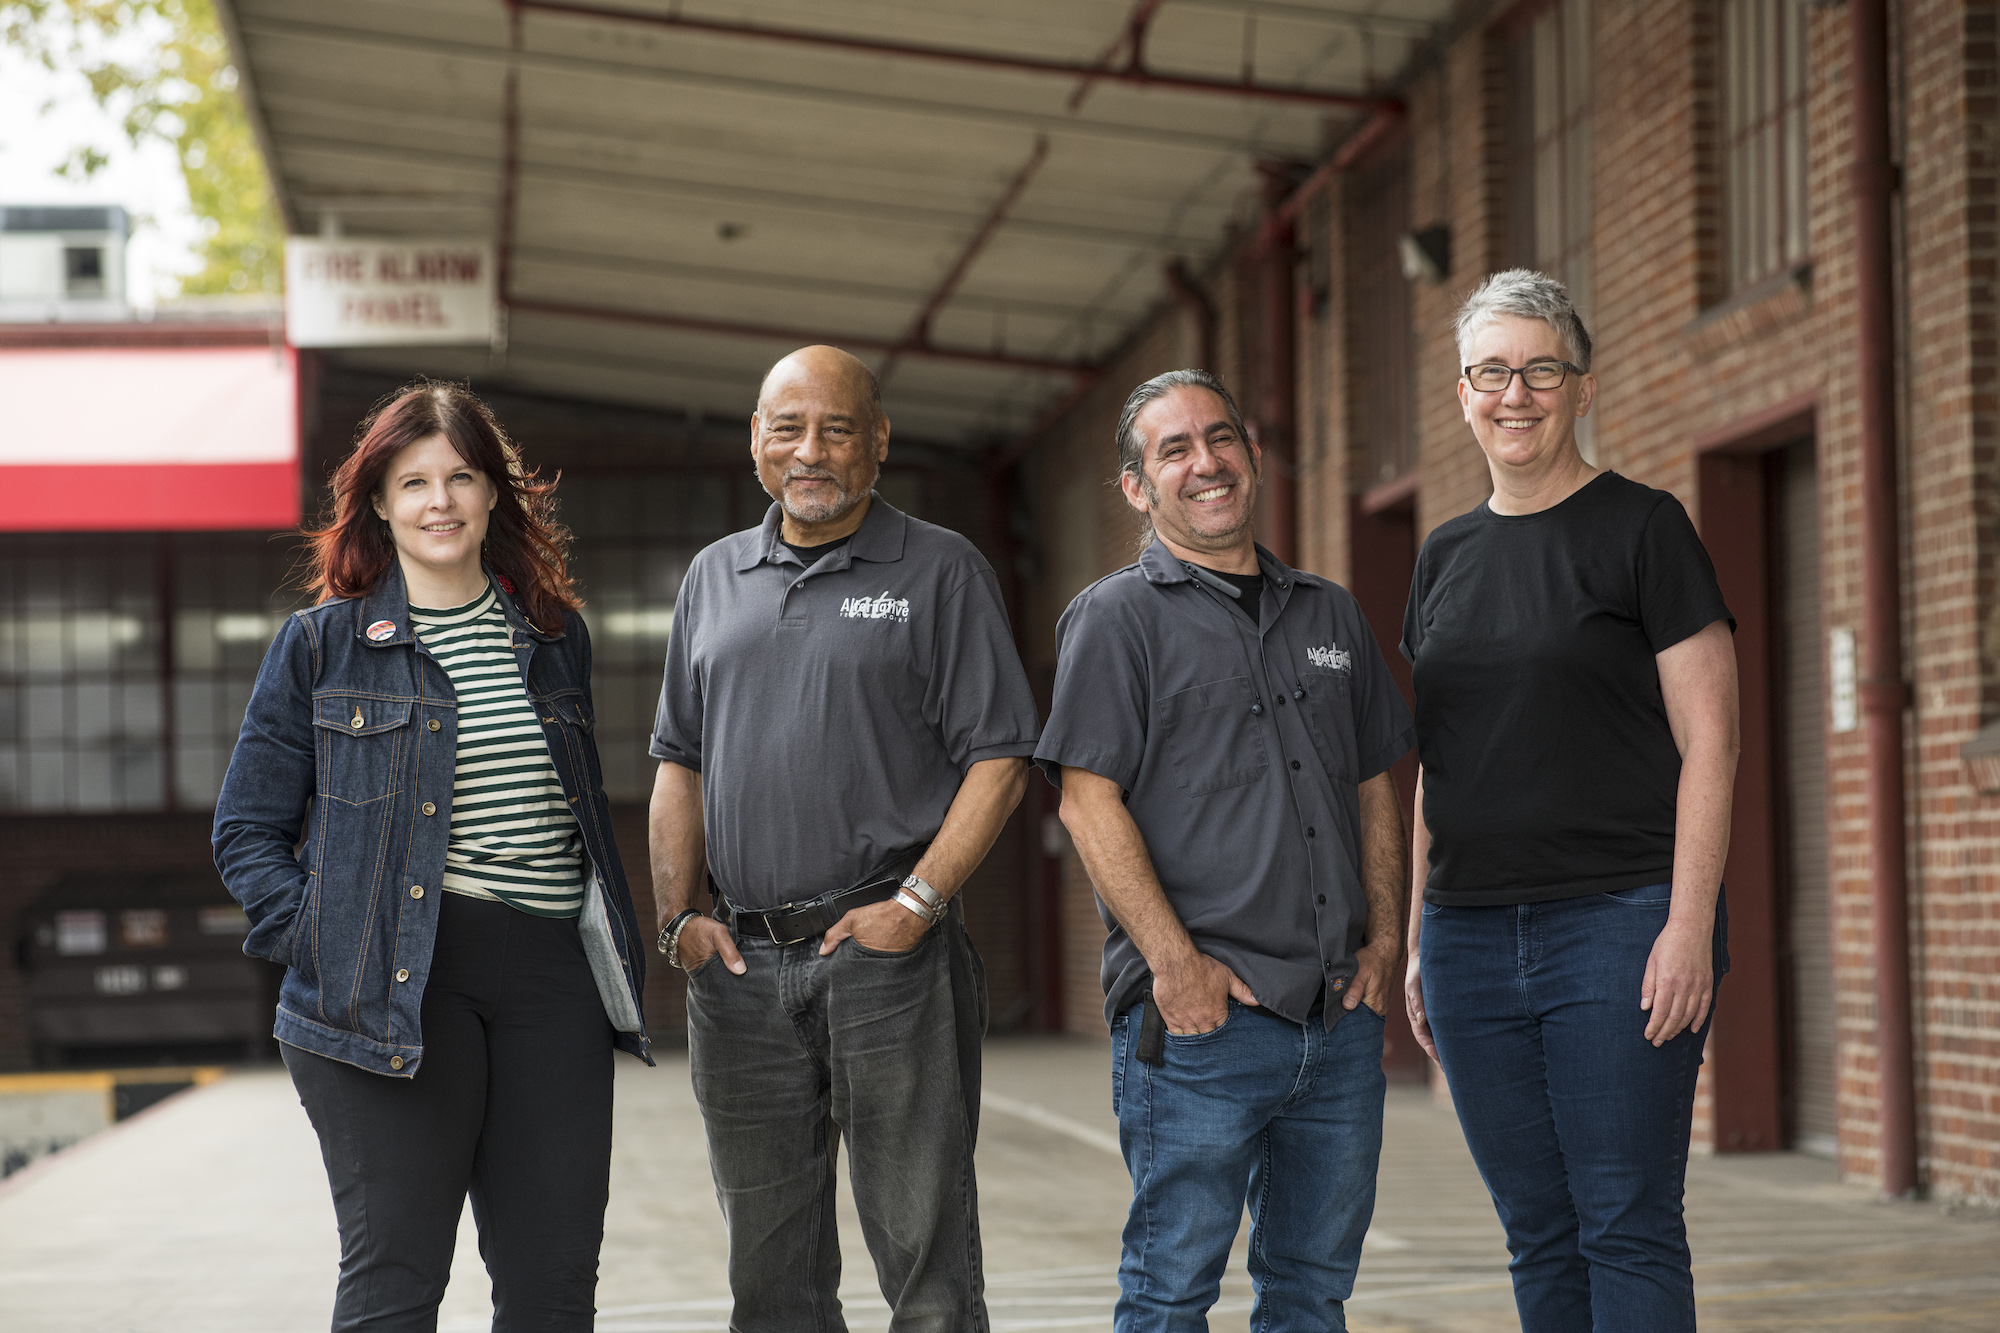 Leslie Carroll, Douglas Jackson, Jody Neumann, and Deborah Farrell, employee-owners at Alternative Technologies